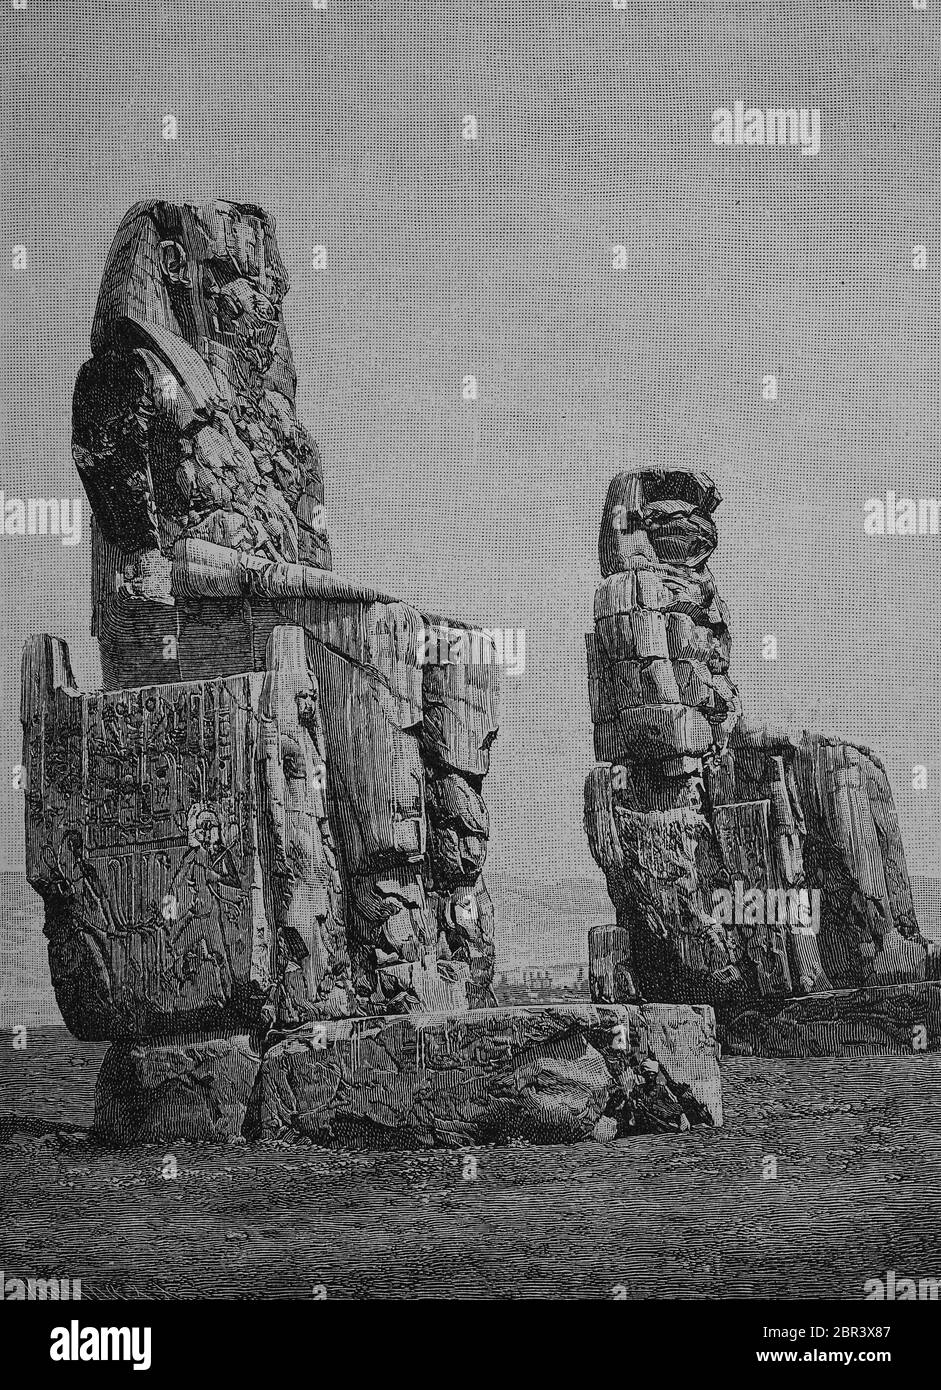 The Colossi of Memnon el-Colossat or es-Salamat, v is two neighboring ancient Egyptian colossal statues from the 14th century. Chr. You are in the valley of the Nile near the Valley of the Kings el-Moluk in Western Thebes, Egypt  /  Die Memnonkolosse el-Colossat oder auch es-Salamat, sind zwei nebeneinander stehende altägyptische Kolossalstatuen aus dem 14. Jahrhundert v. Chr. Sie befinden sich im Niltal unweit des Tals der Könige el-Moluk, in Theben-West, Ägypten, Historisch, historical, digital improved reproduction of an original from the 19th century / digitale Reproduktion einer Originalv Stock Photo